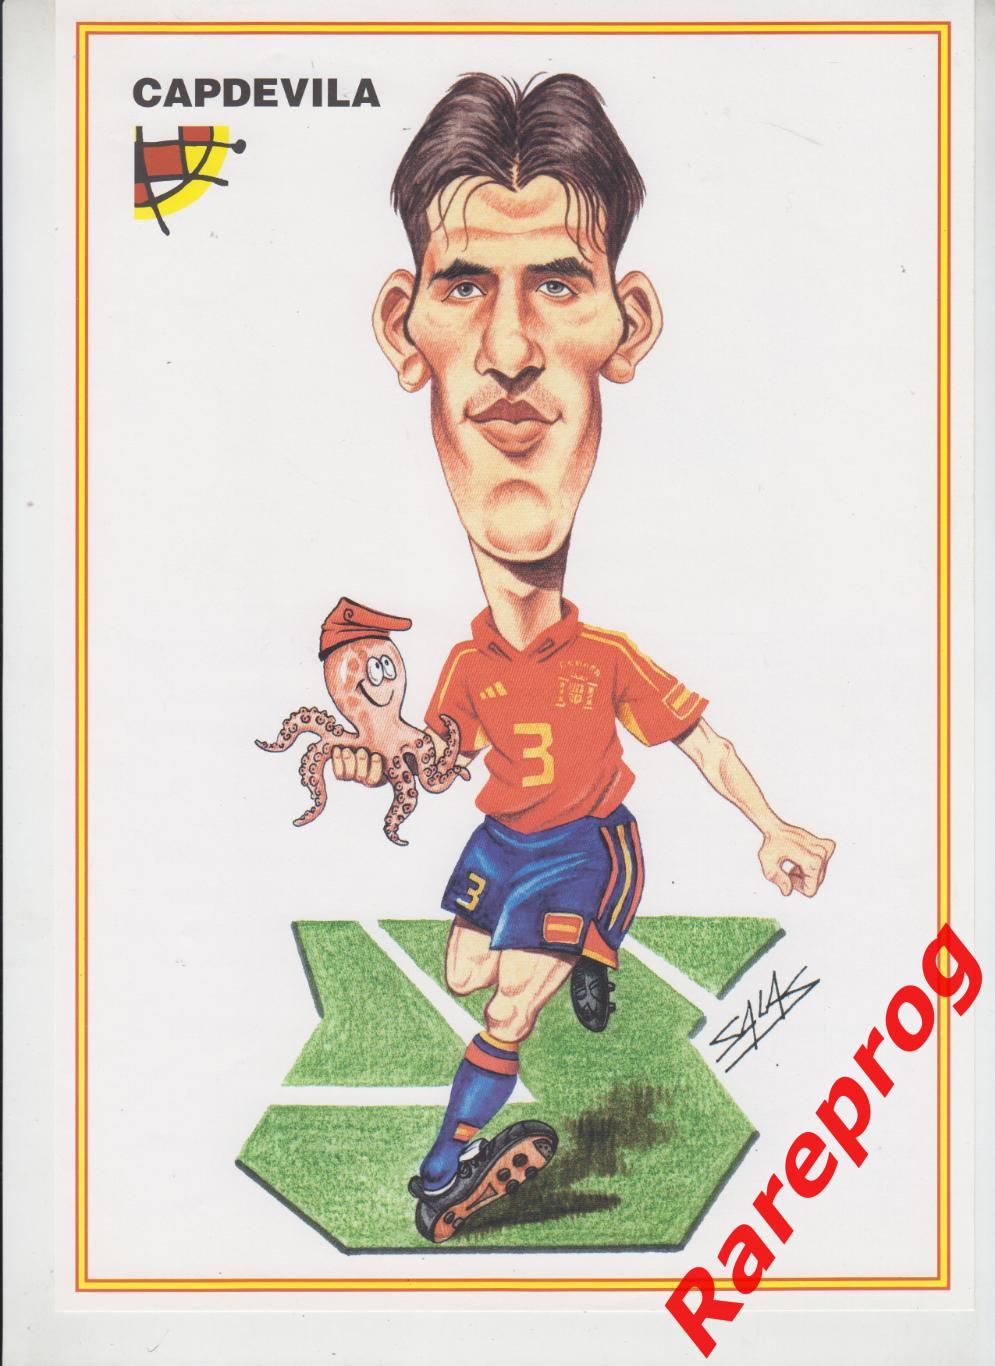 журнал Футбол RFEF Испания № 67 октябрь 2004 - постер CAPDEVILA 1